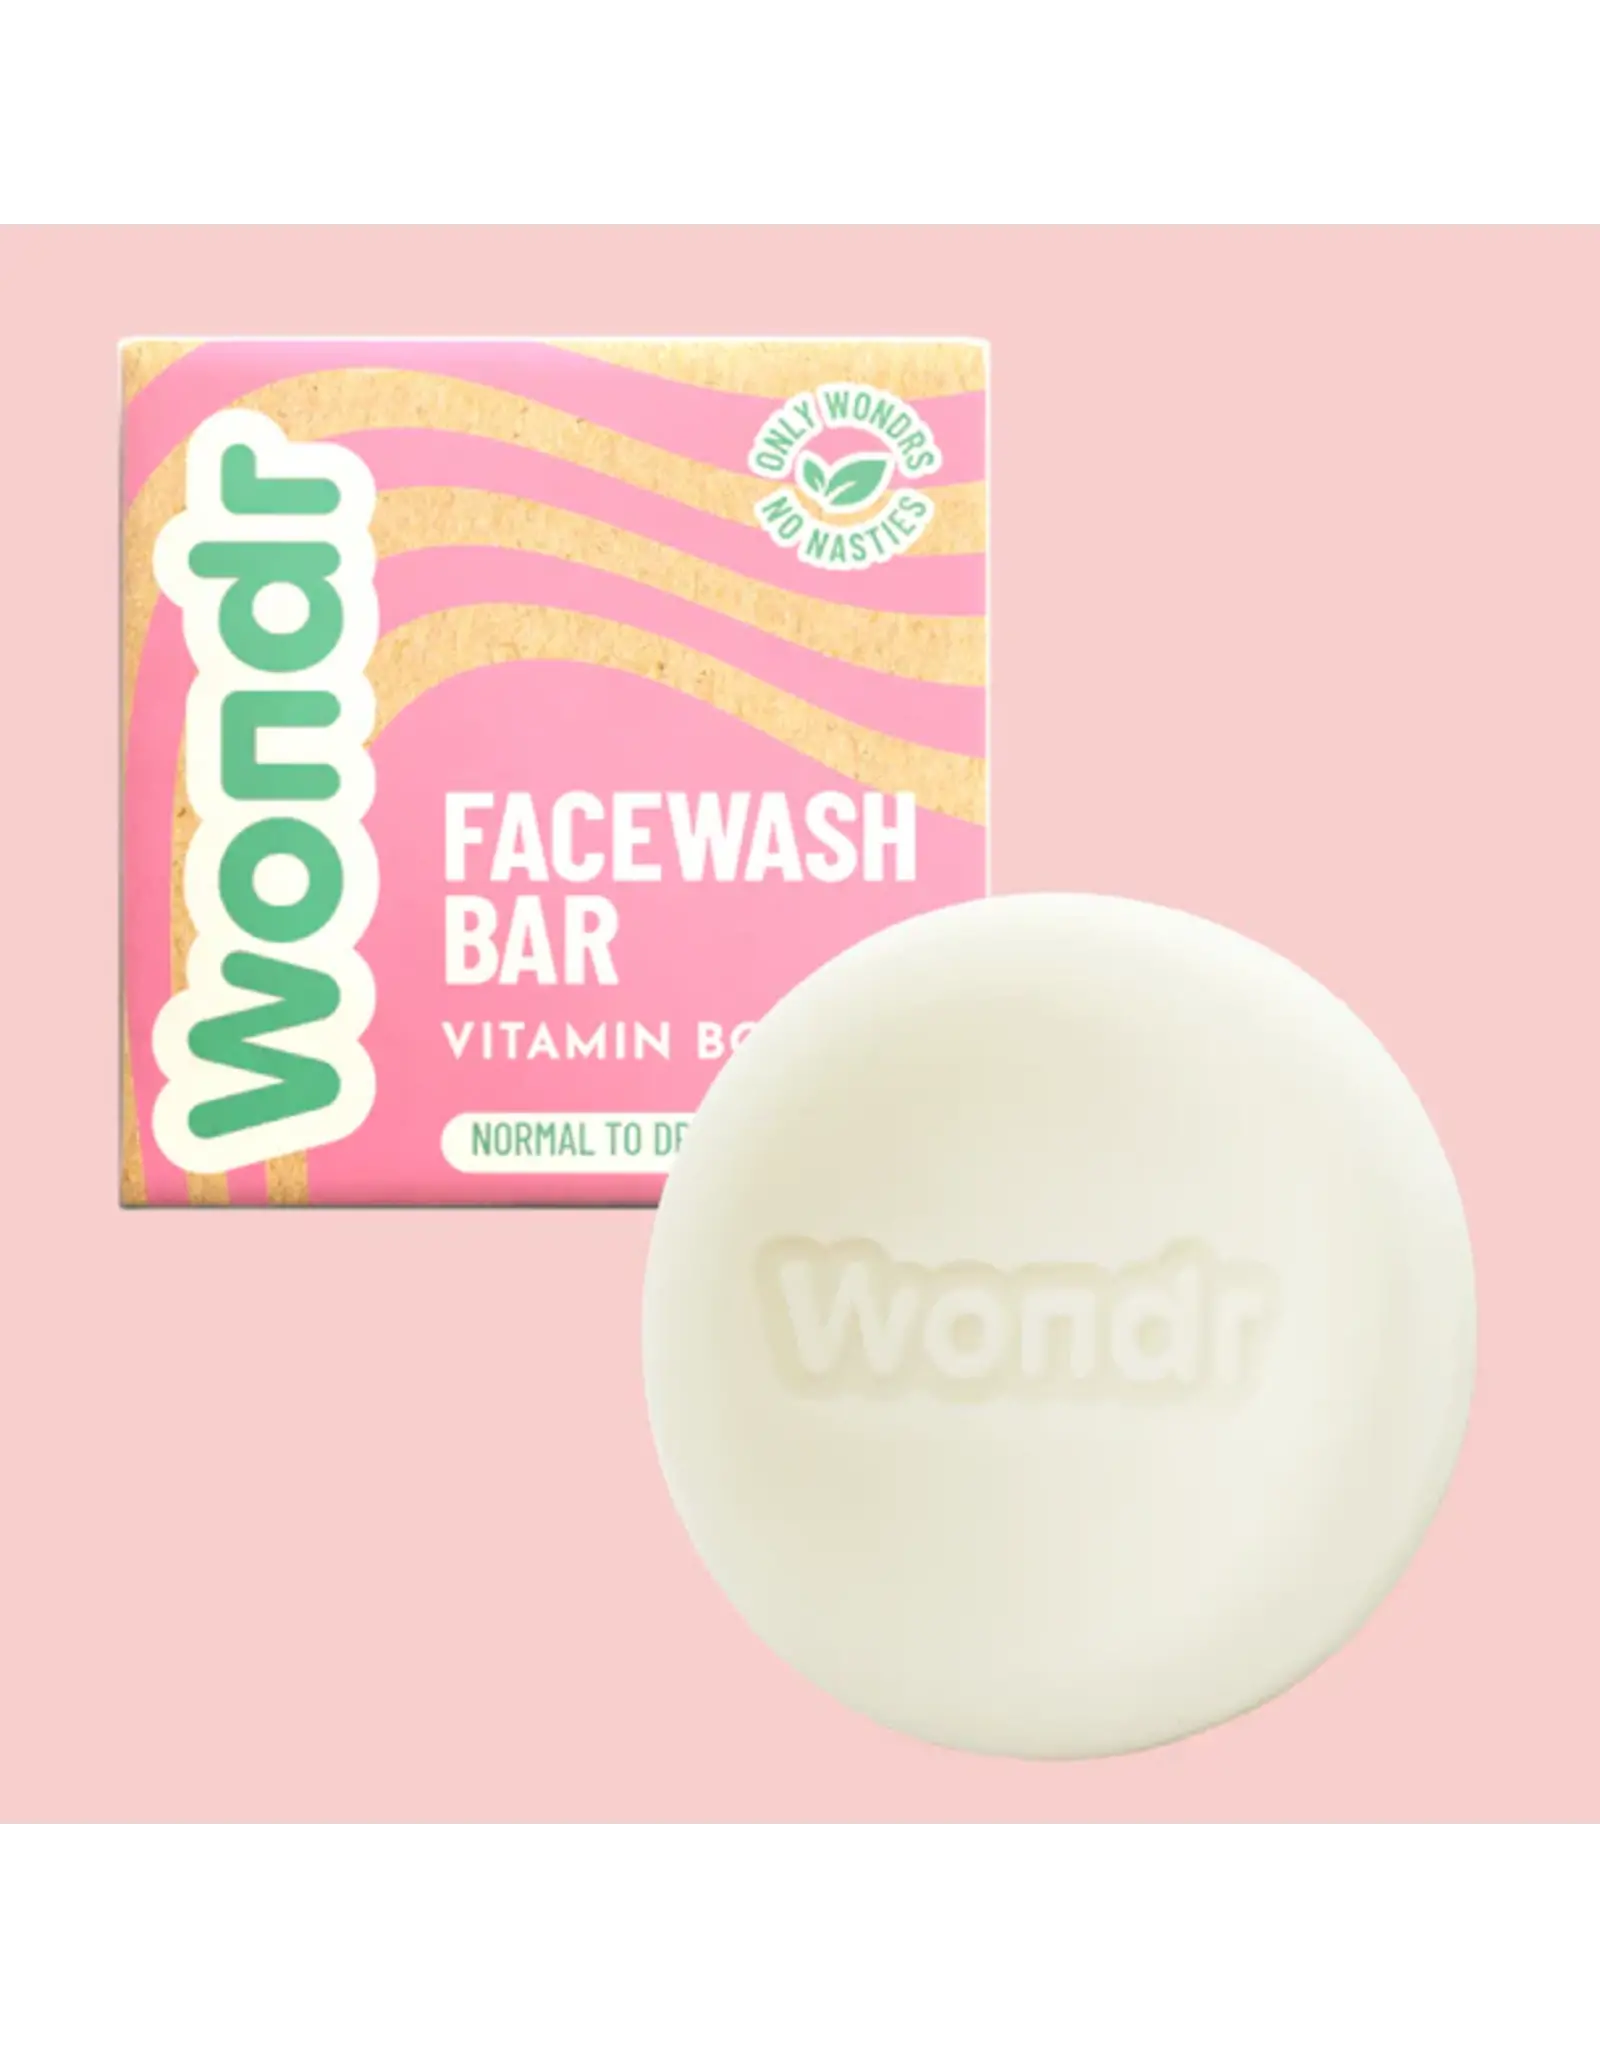 Facewash bar Vitamin boost